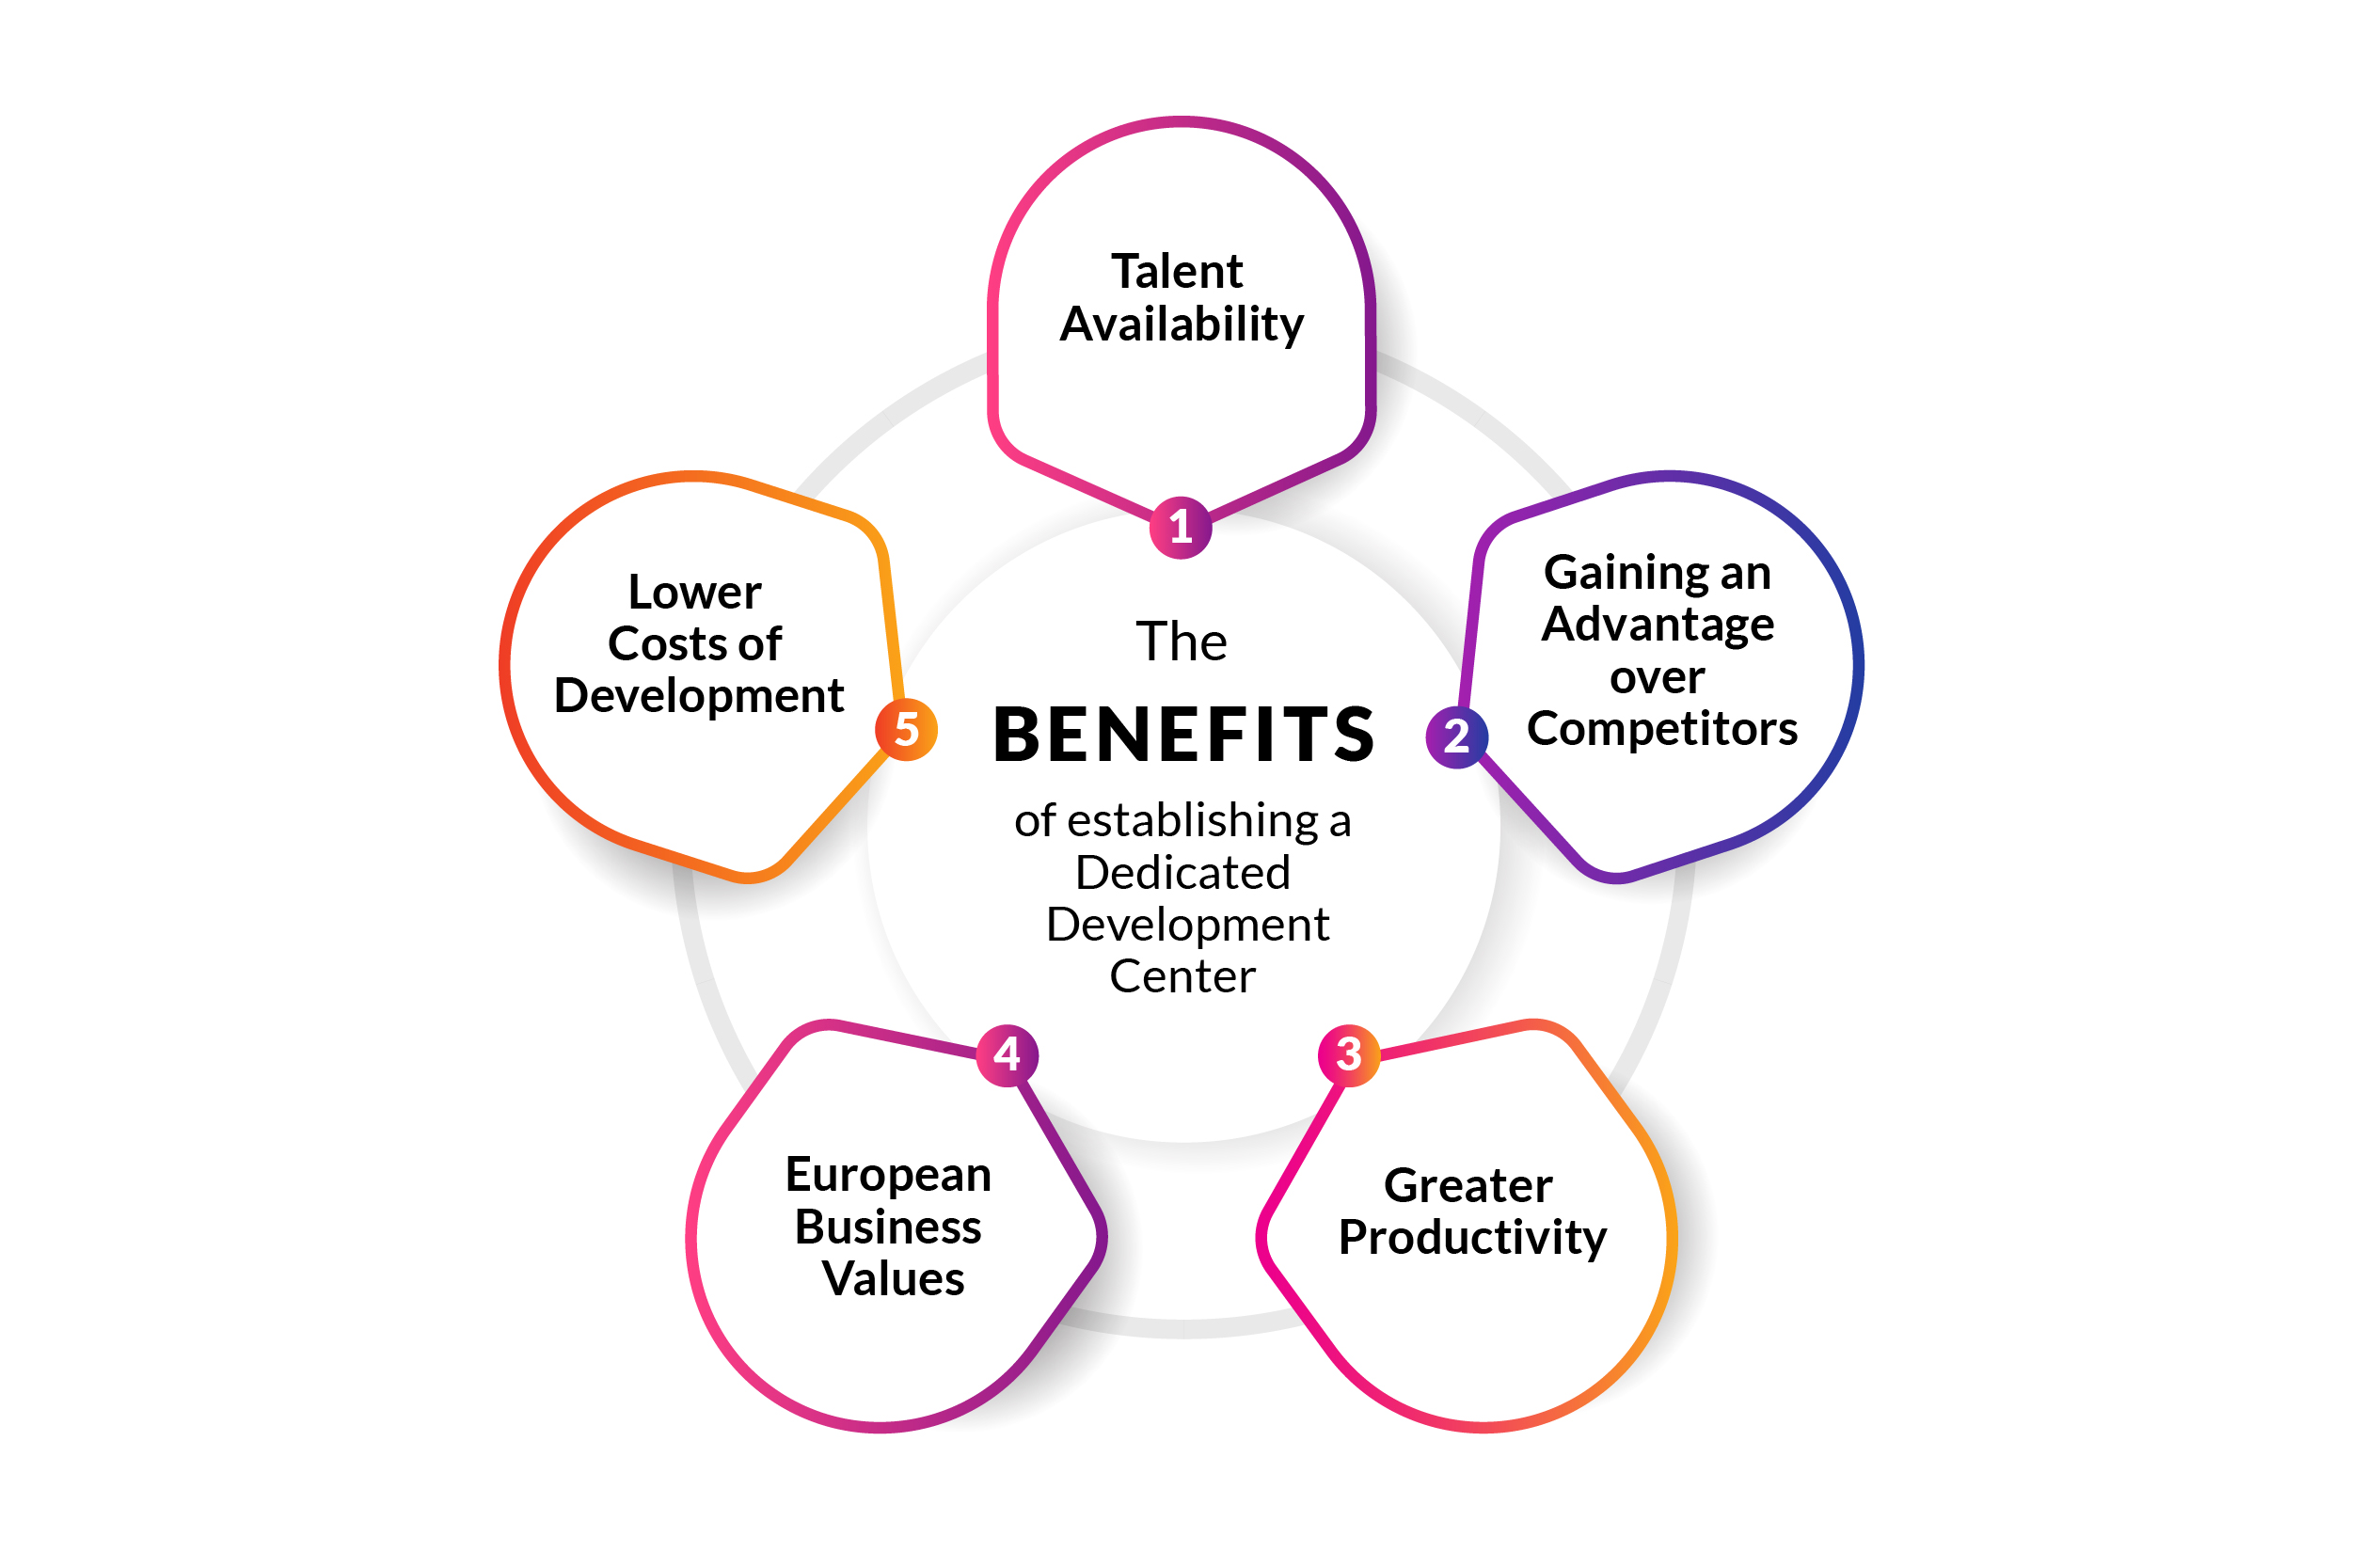 The Benefits of establishing a Dedicated Development Center